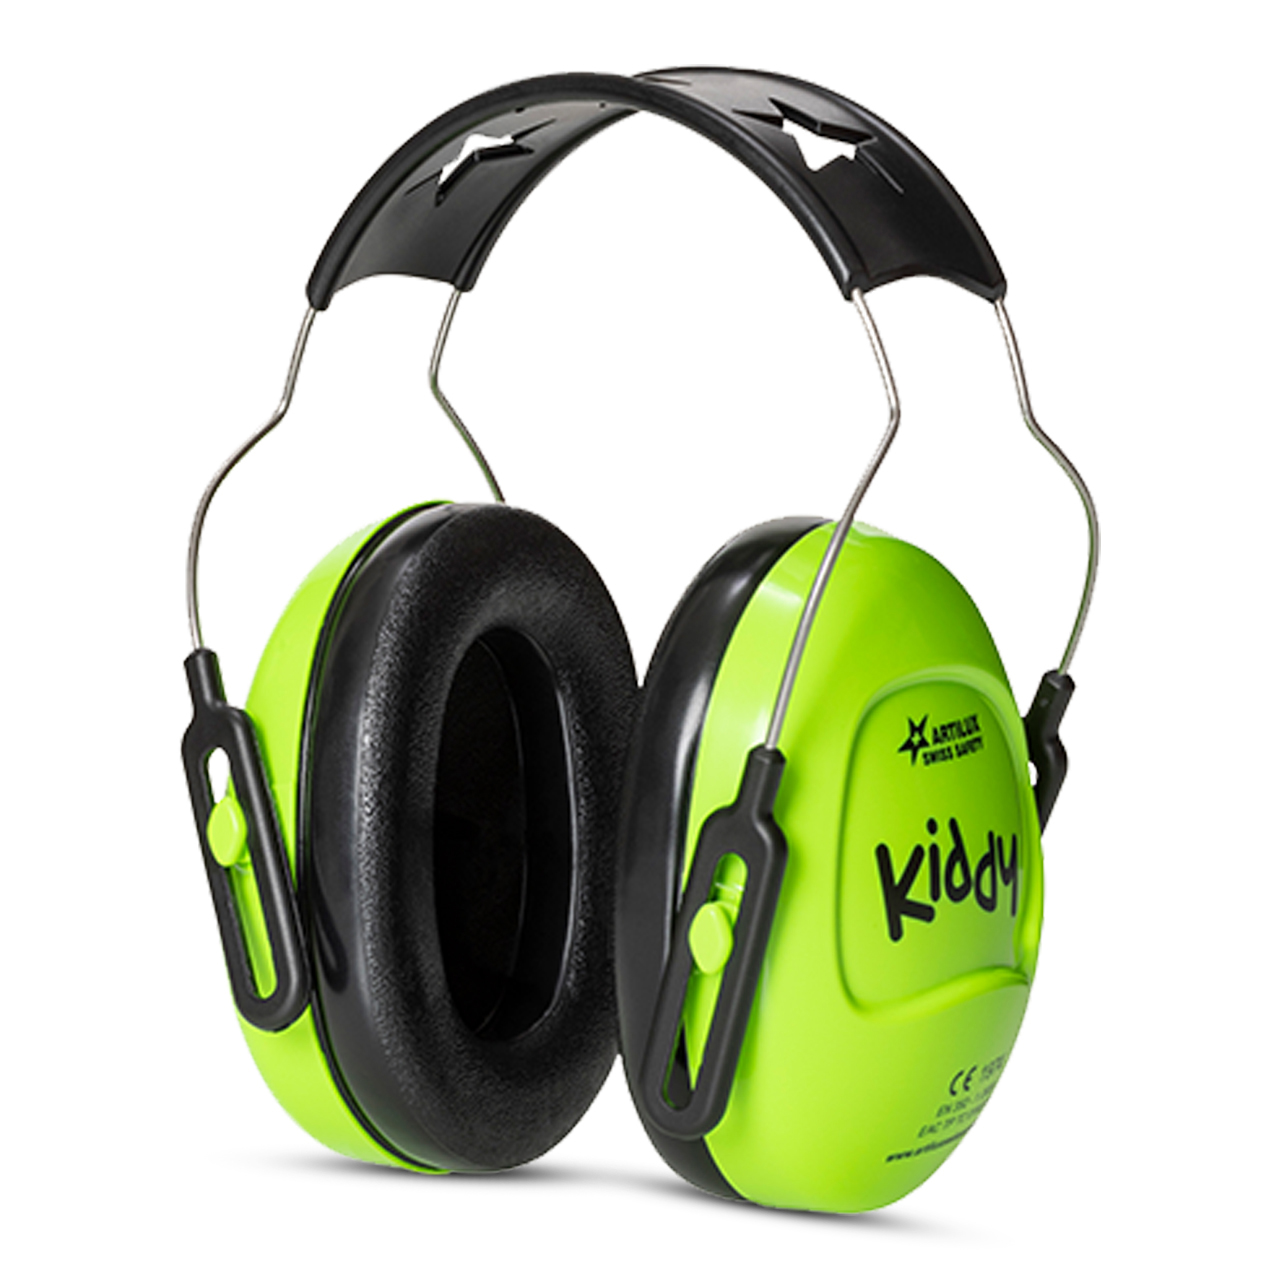 Kiddy Protection auditive pour enfants vert